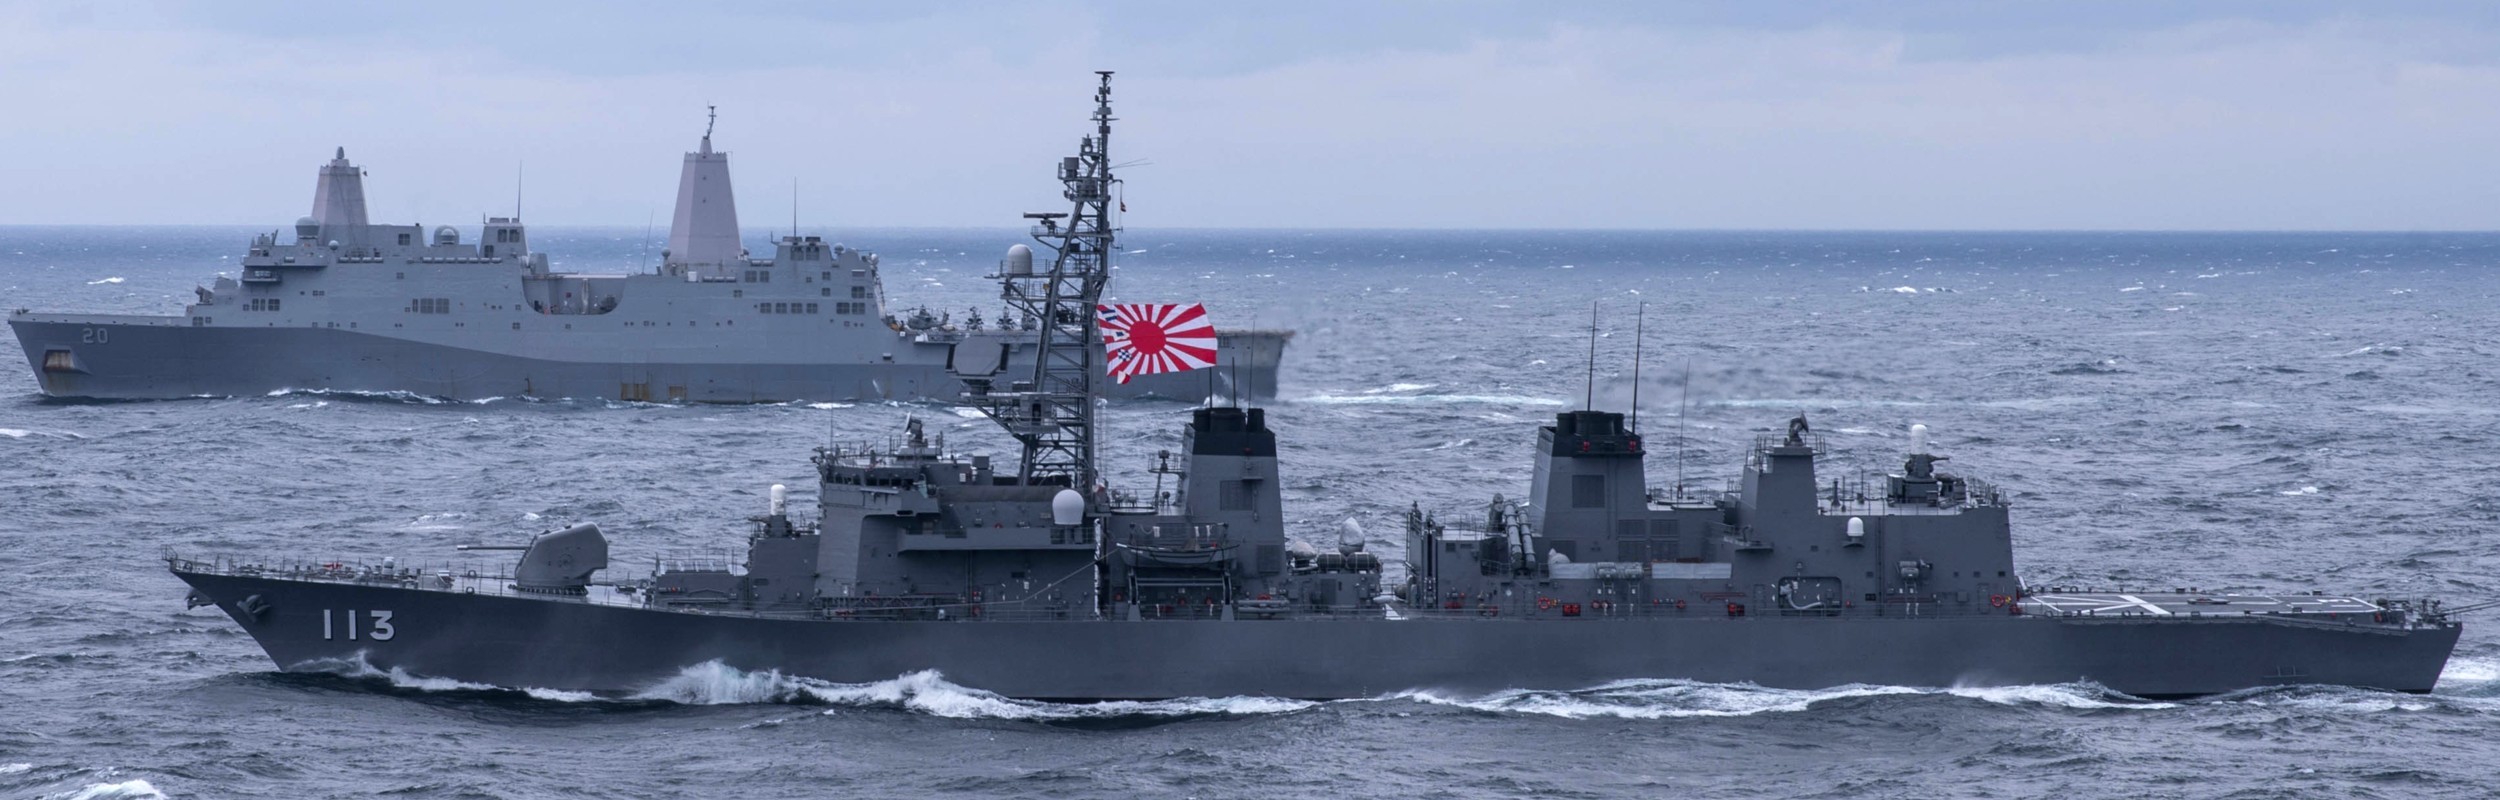 dd-113 js sazanami takanami class destroyer japan maritime self defense force jmsdf 15